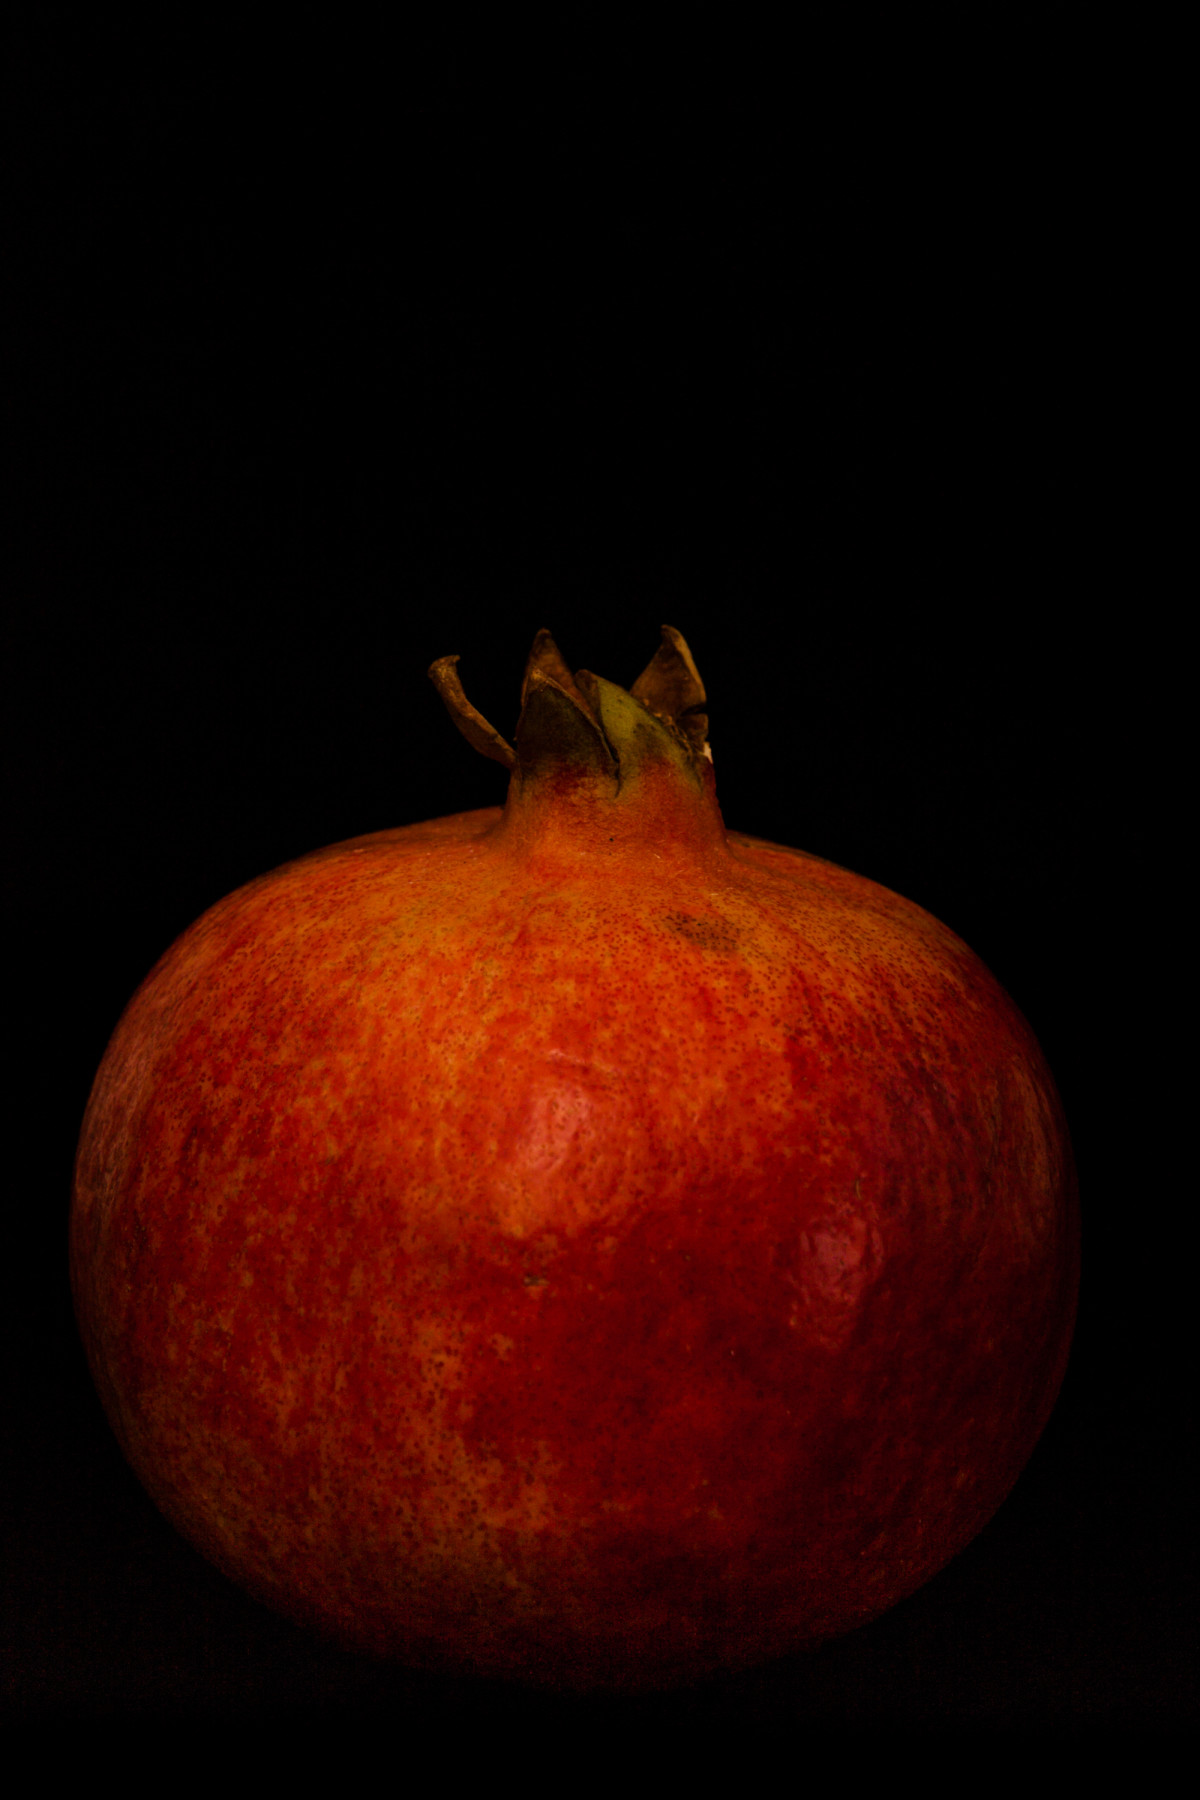 Image of the million dollar pomegranate